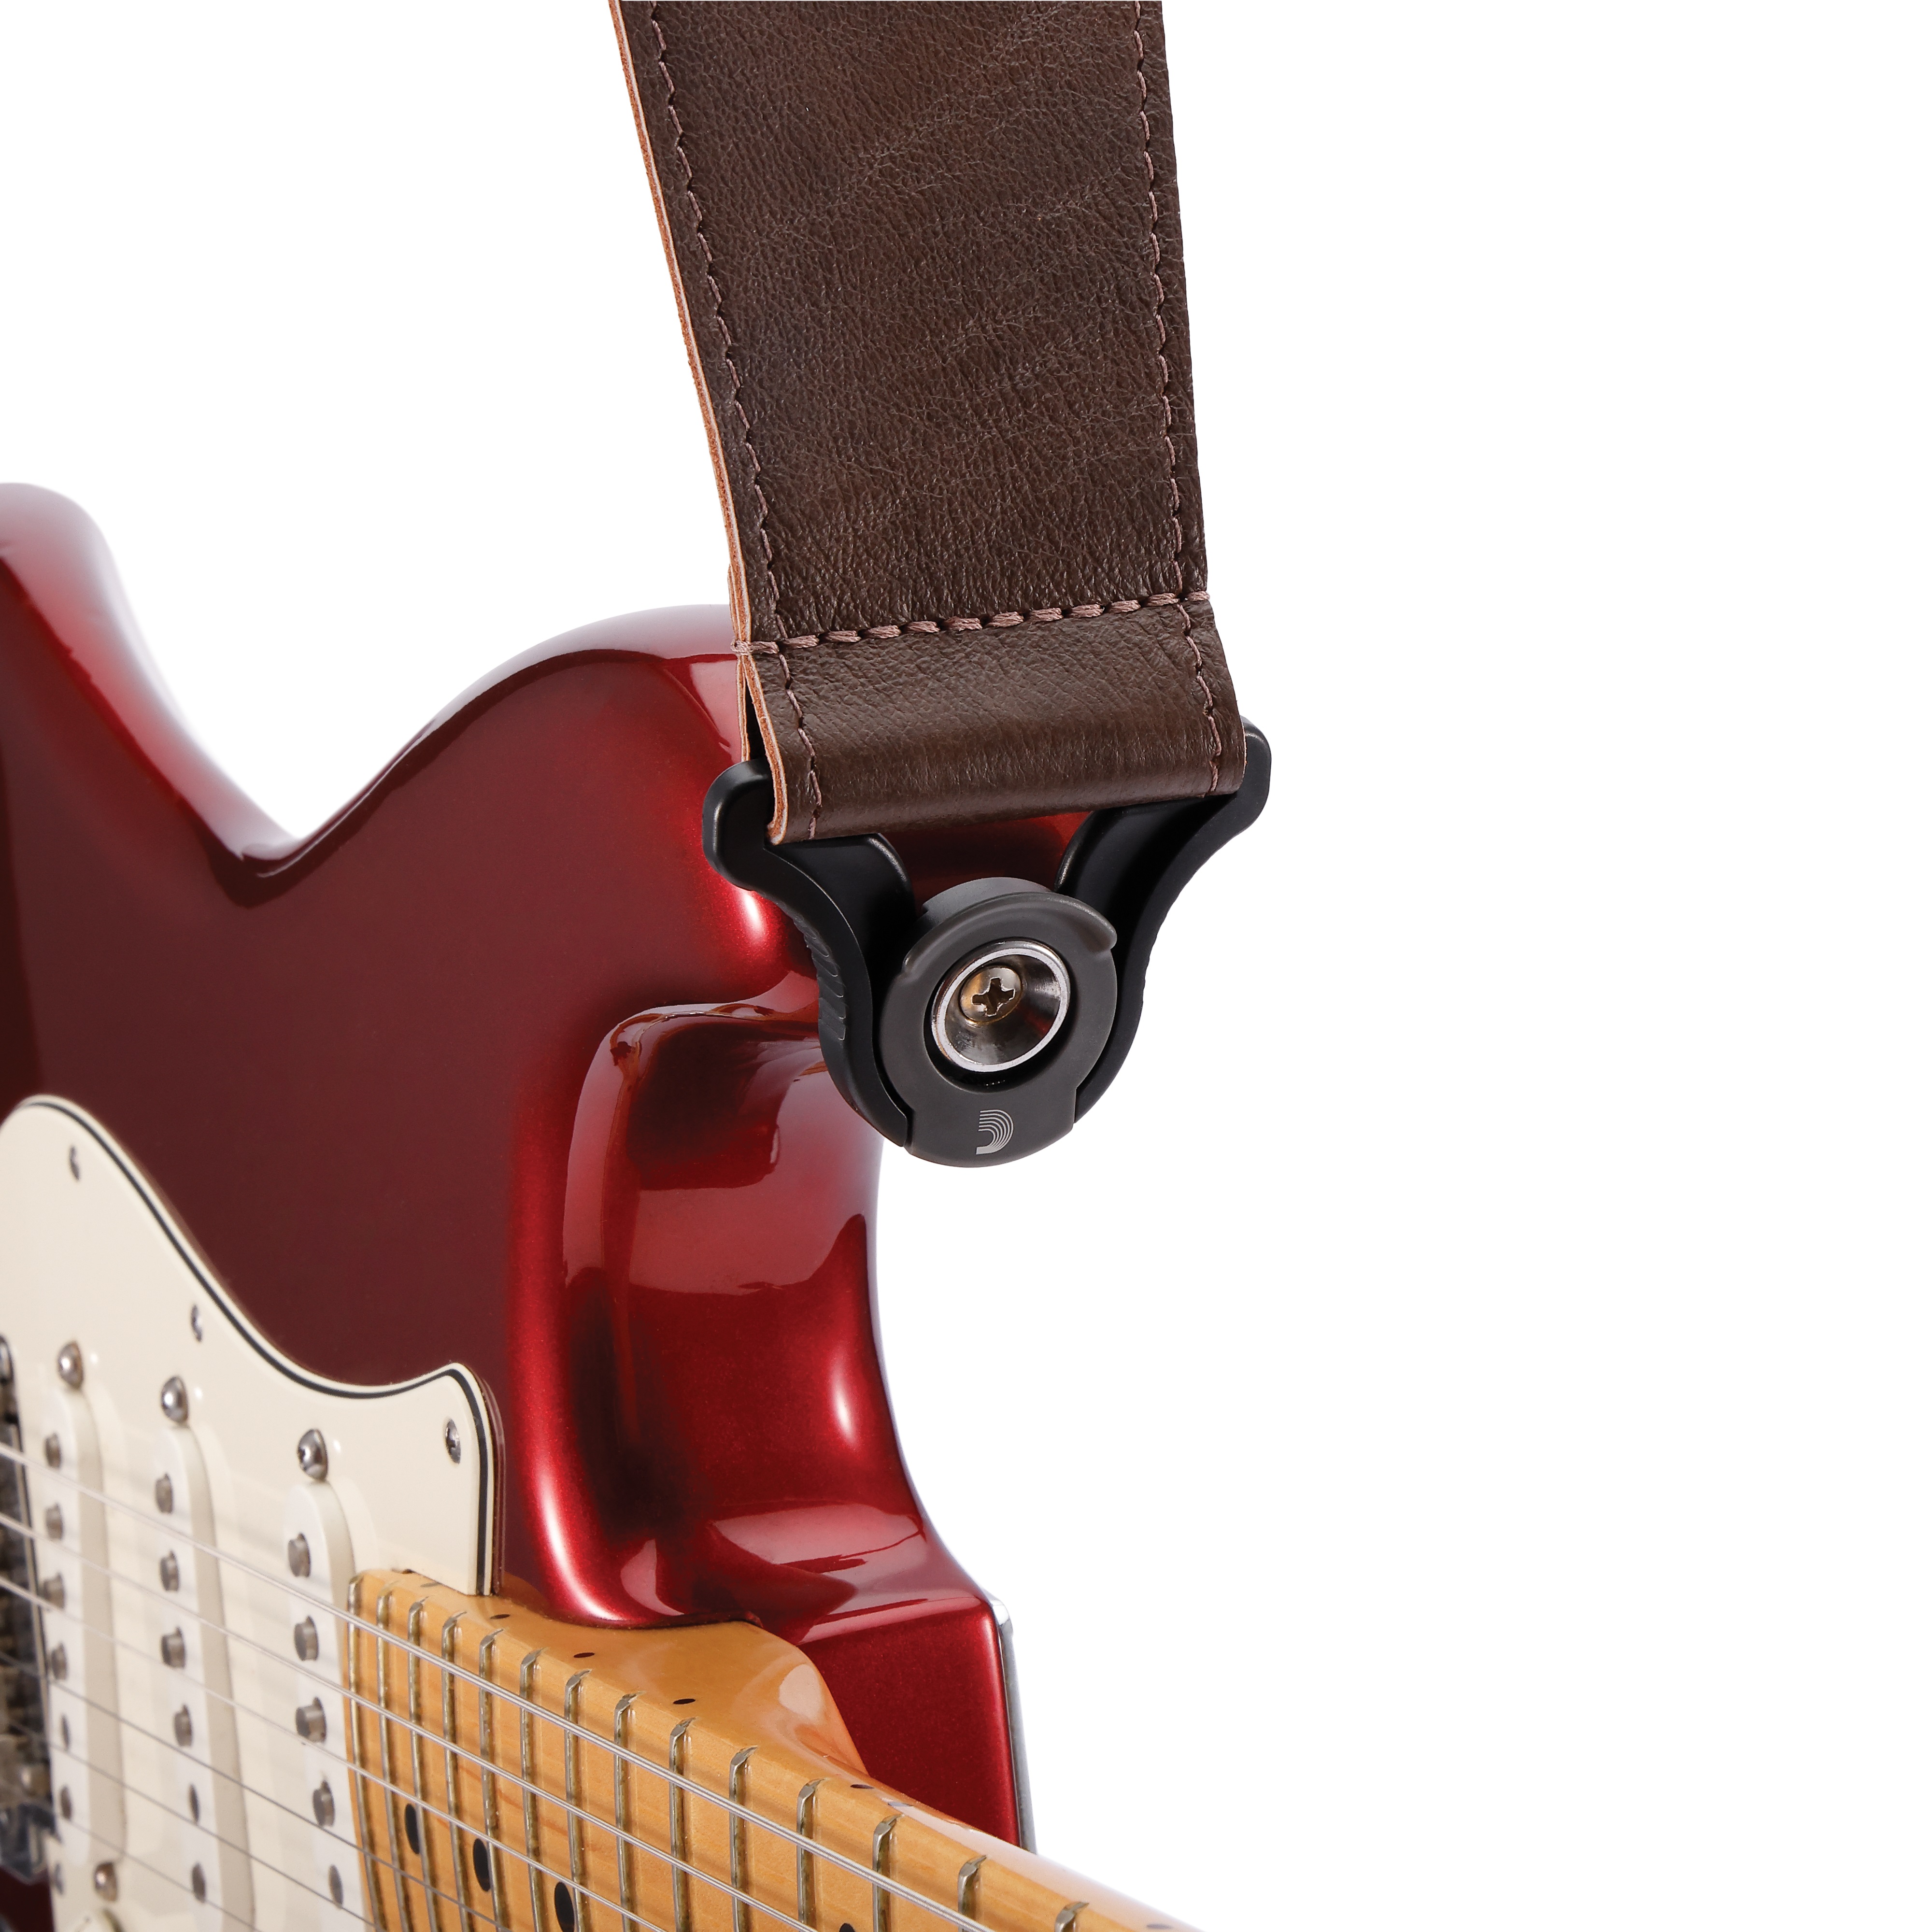 D'addario Auto Lock Cuir Guitar Strap Brown 6,3 Cm - Guitar strap - Variation 3